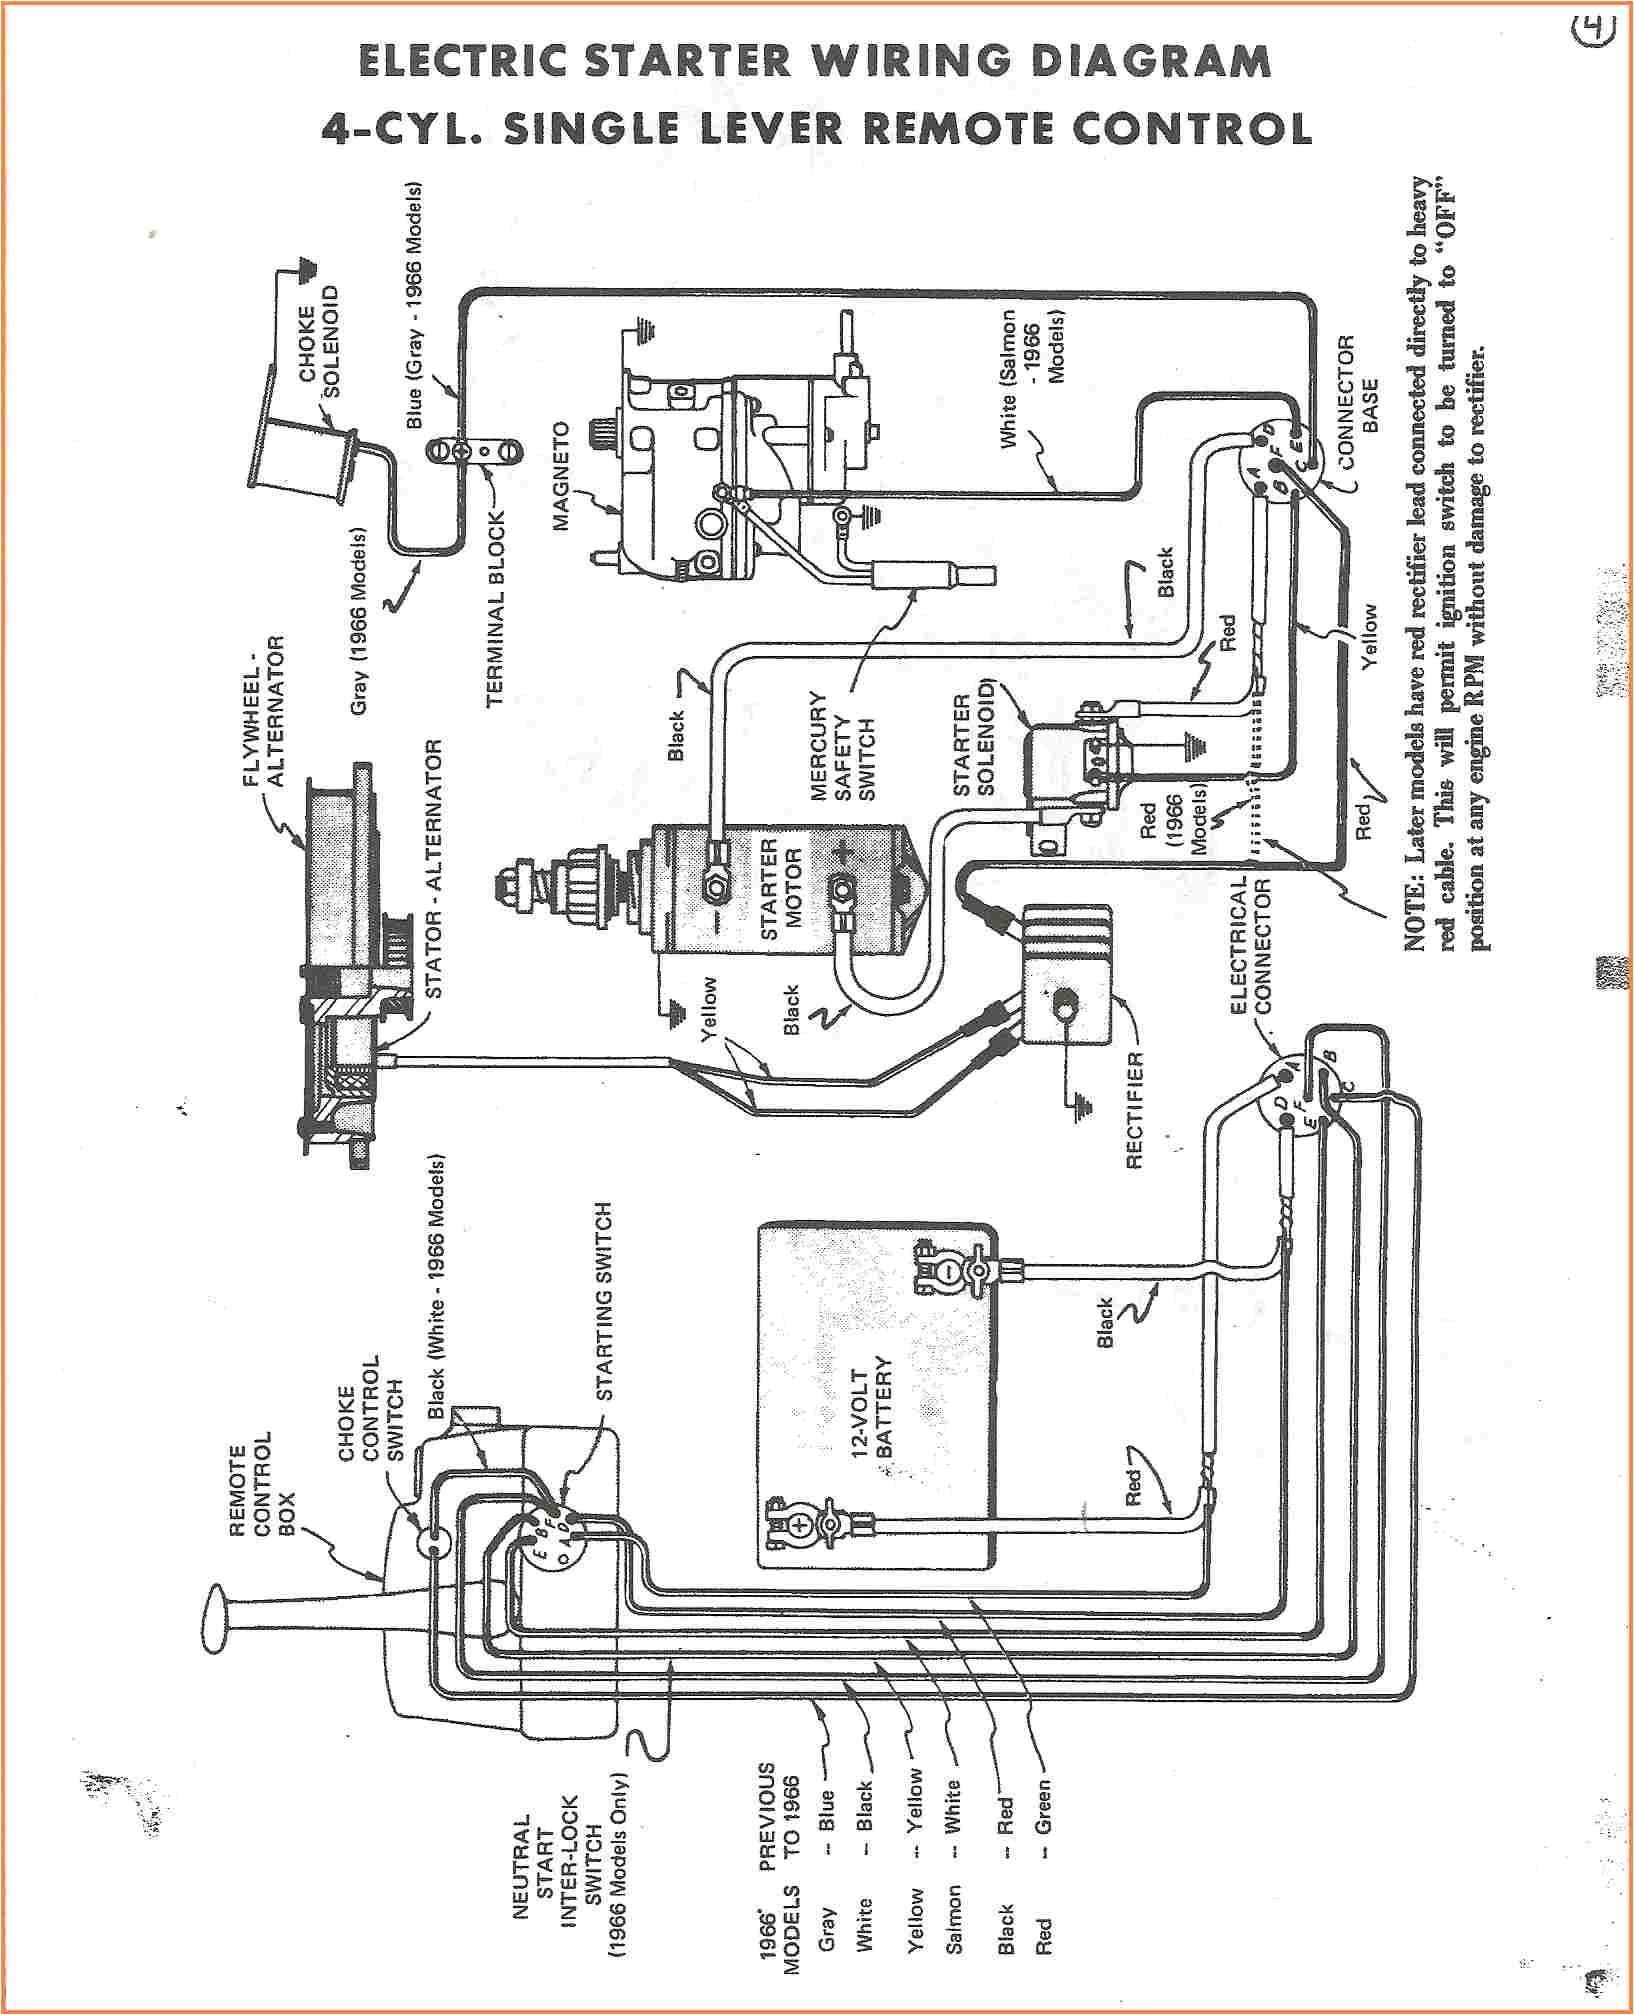 merc 500 wiring diagram wiring diagram mercury switch box wiring diagram mercury 500 wiring diagram